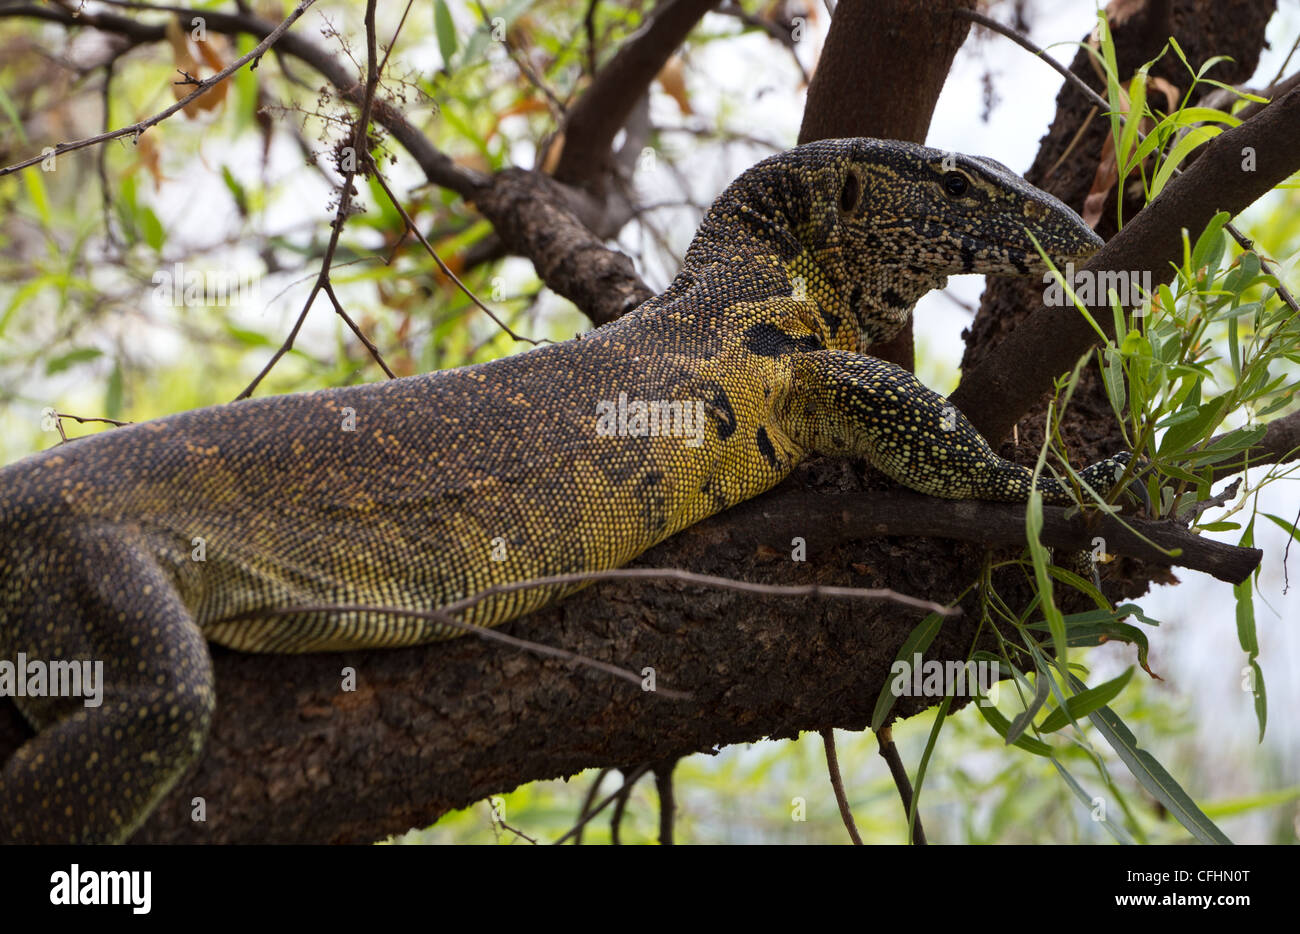 Nile monitor lizard in a tree Stock Photo